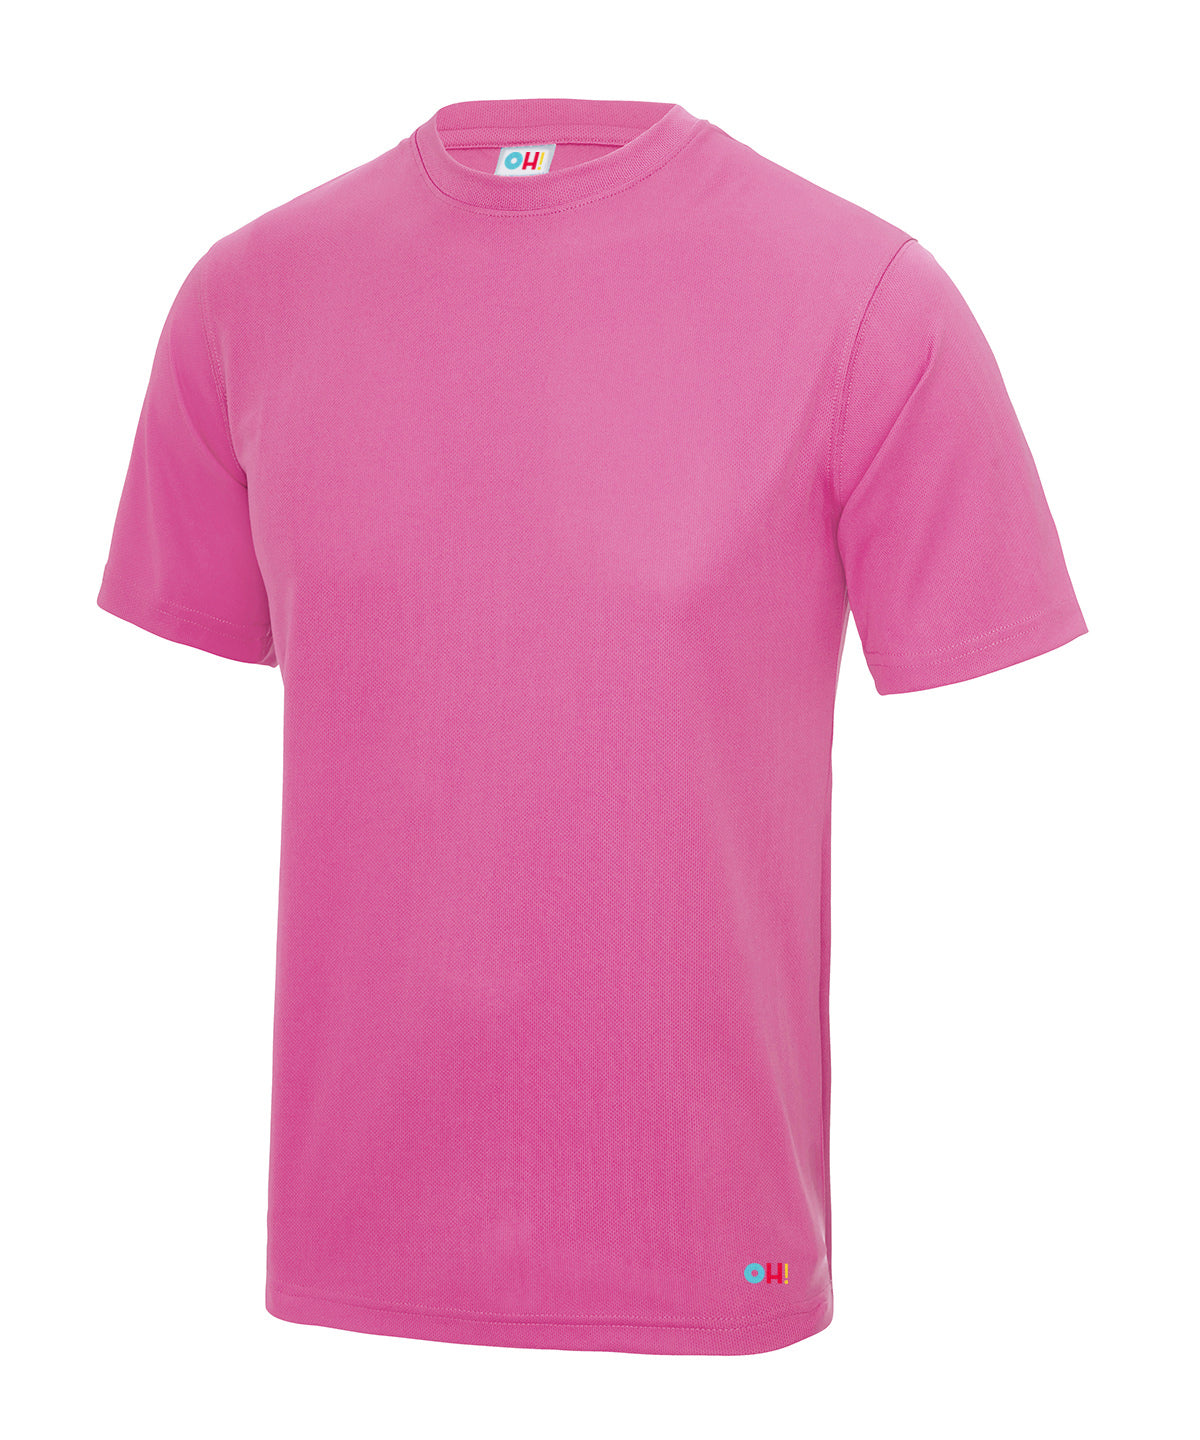 OH! Dorothy Basics Cool T-Shirt / 20 Colours